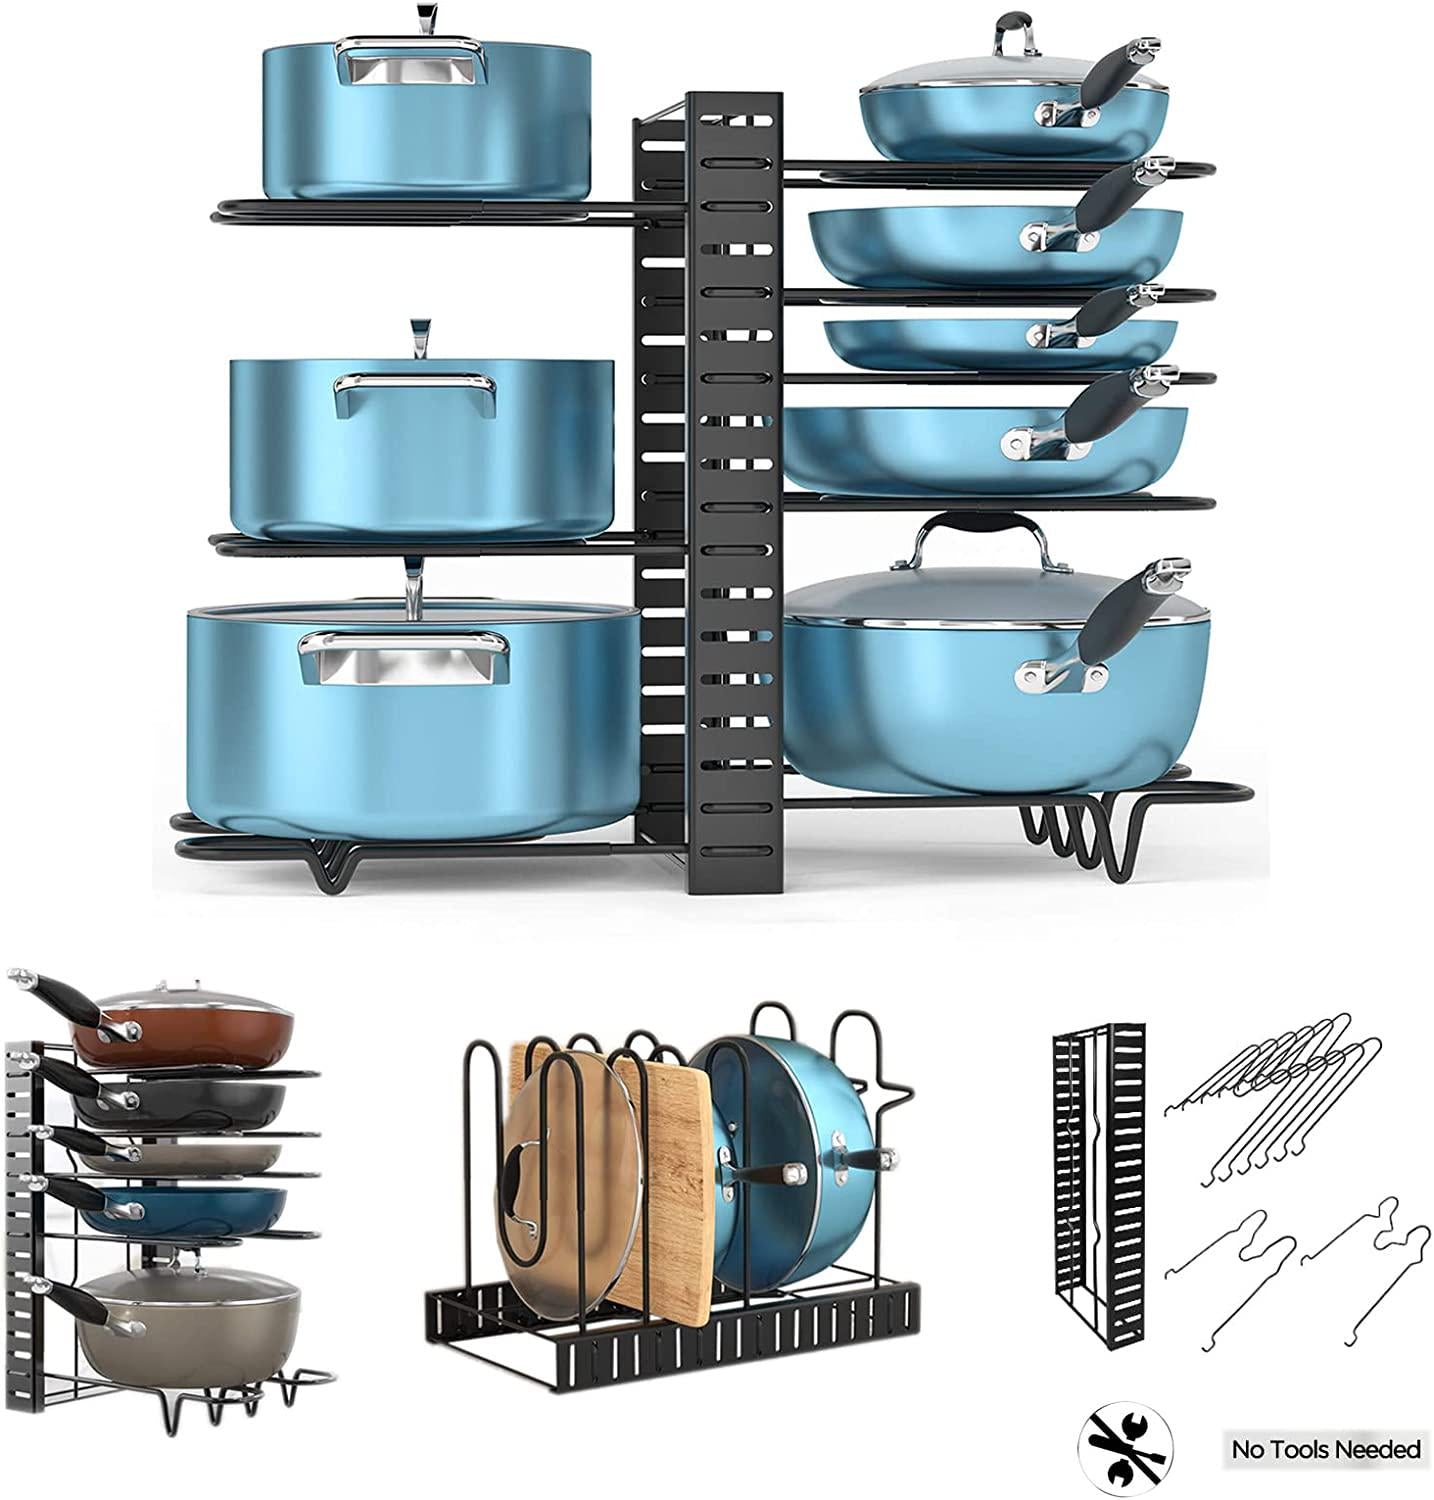 Koreal, Koreal Home Pot Rack Organizers, 8 Tier Pots and Pans Organizer, Adjustable pot rack and Pan Rack for Kitchen Counter and Cabinet, With 3 DIY Methods (black)